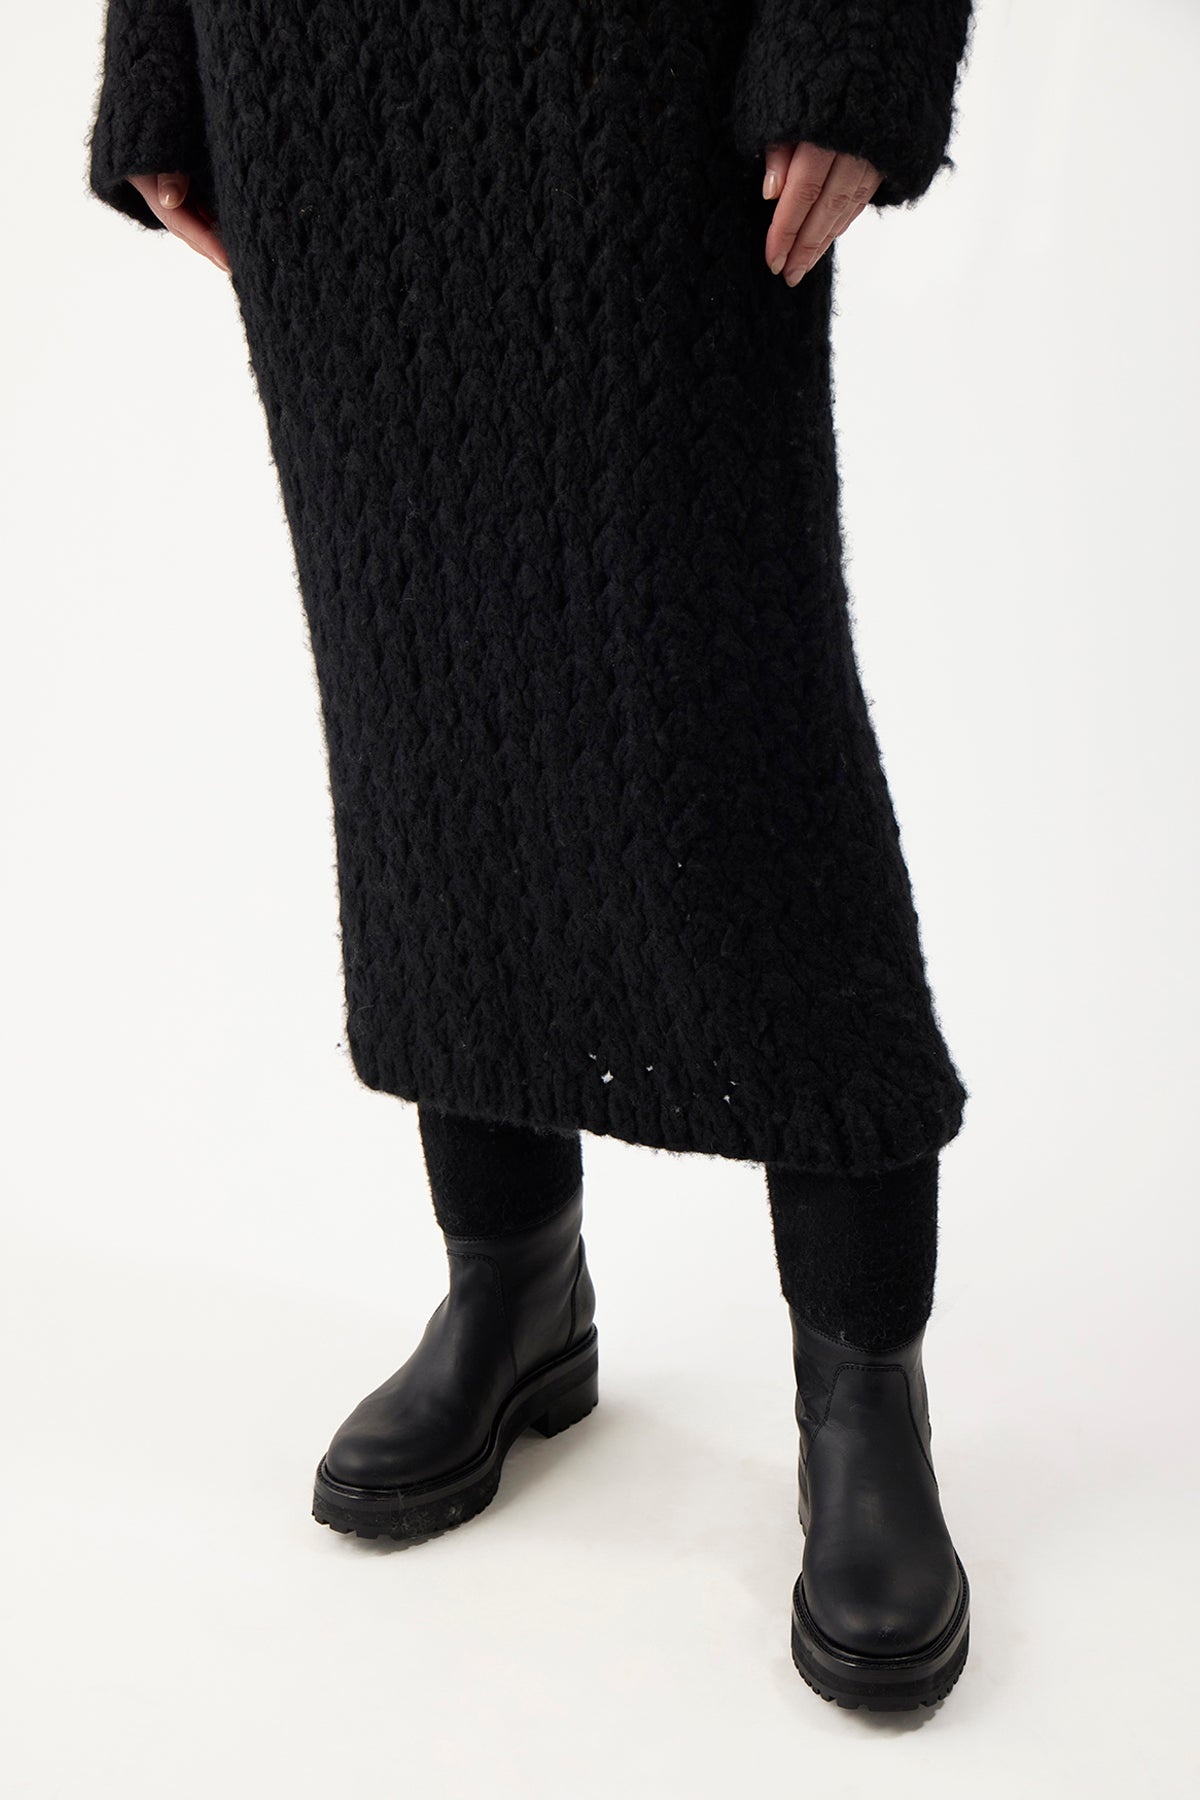 Collin Skirt in Black Welfat Cashmere - 5